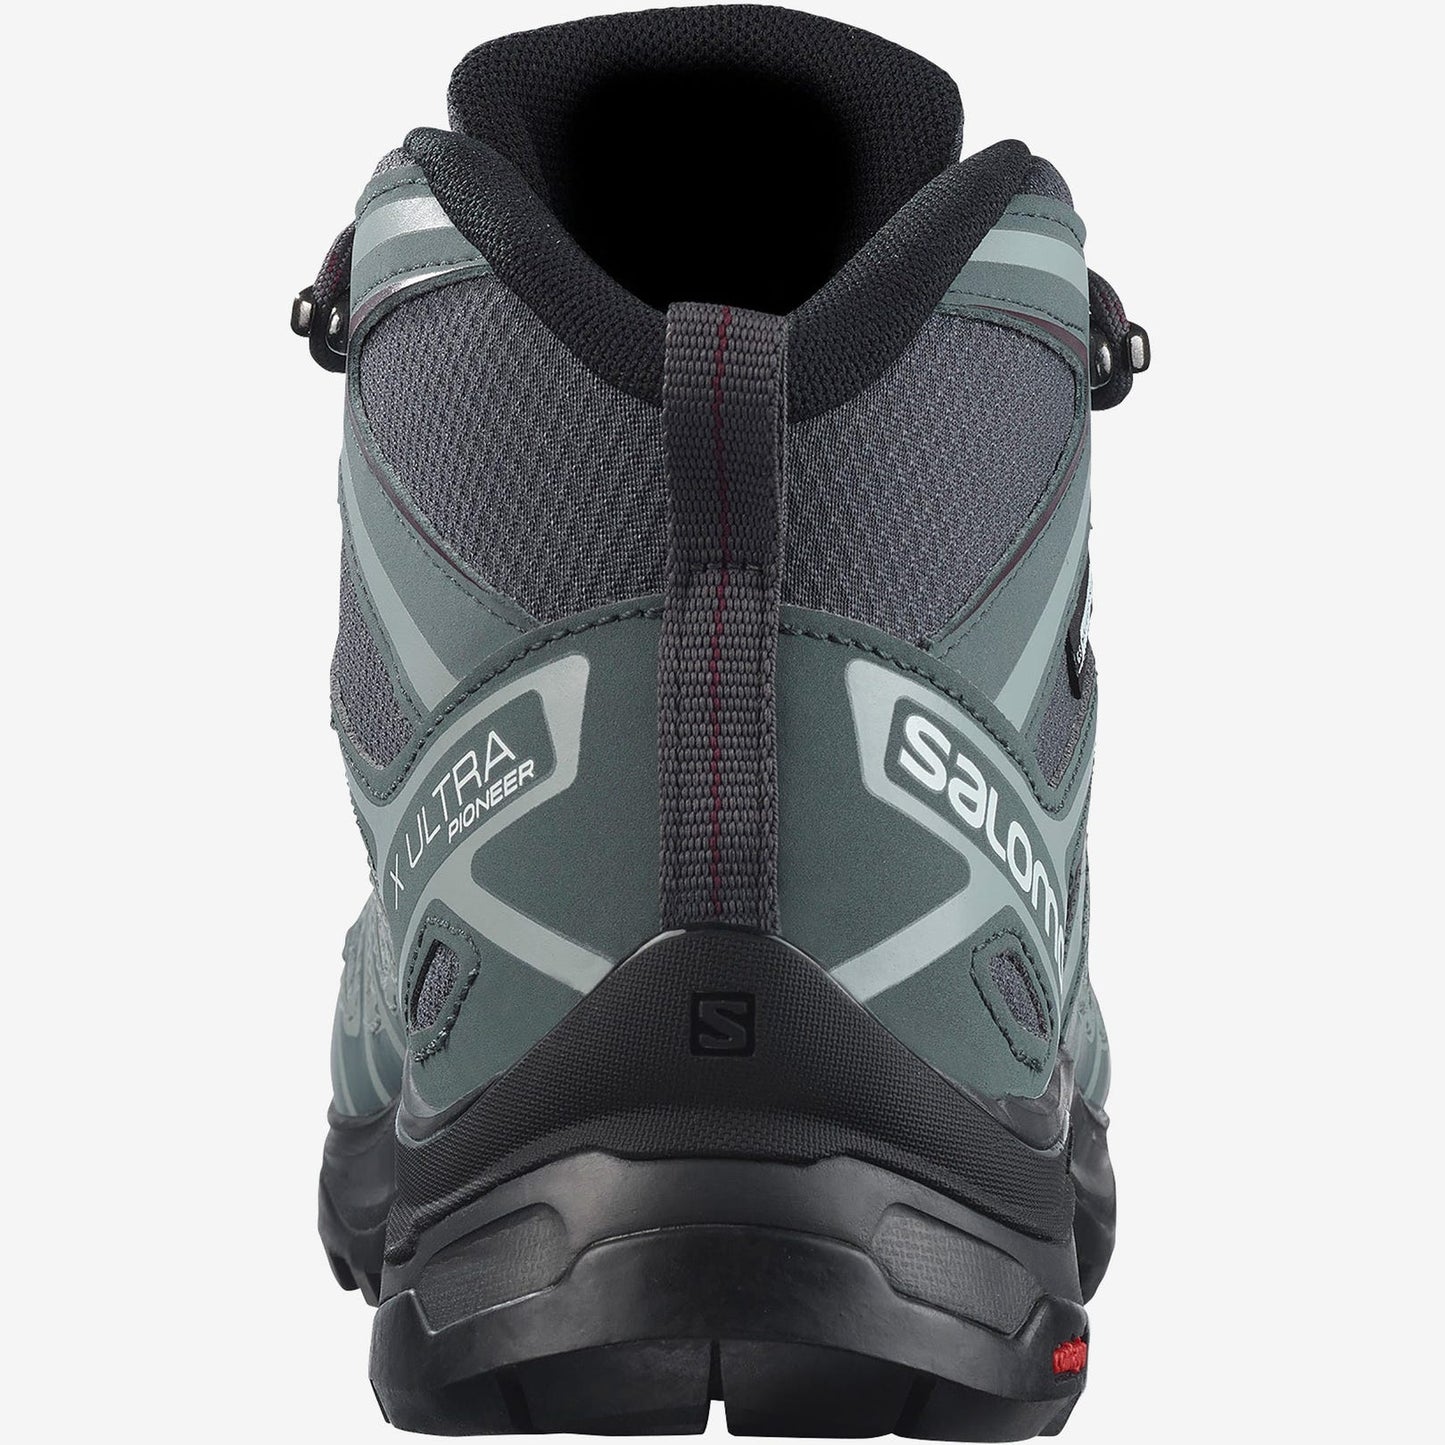 Salomon Women's X Ultra Pioneer Mid Climasalomon Waterproof Hiking Boots